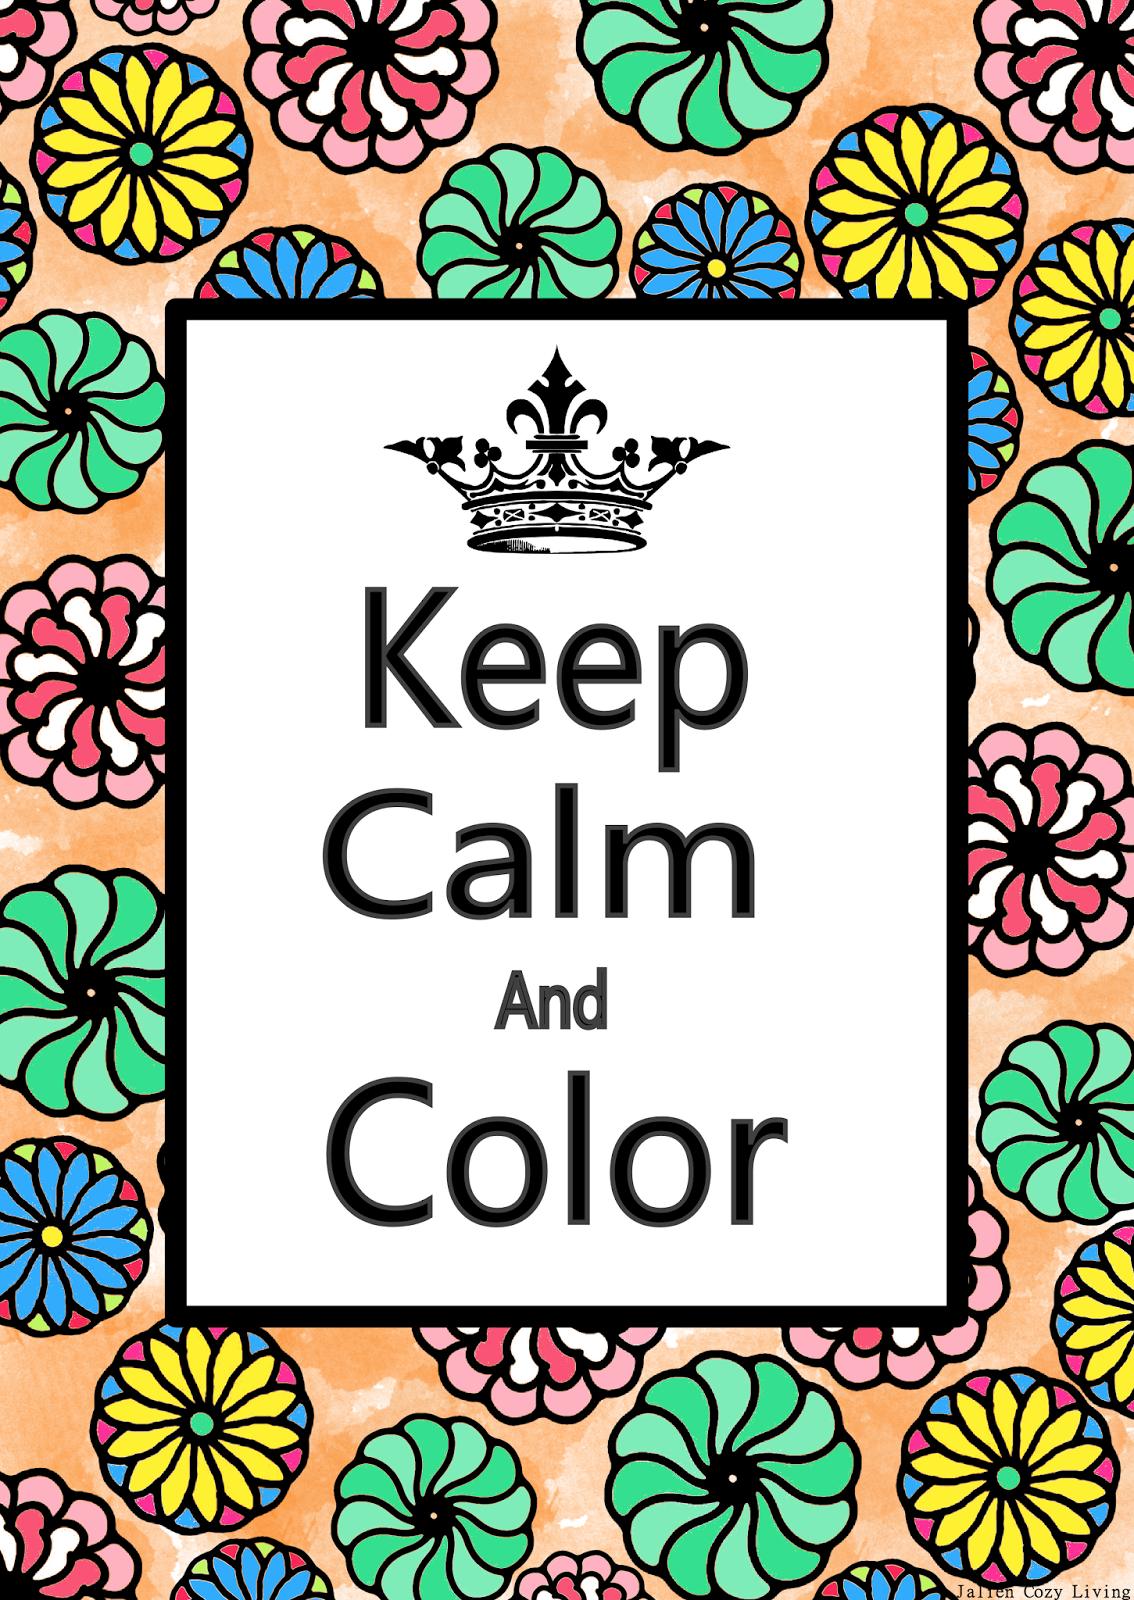 Gratis Kleurplaat | Free Coloring Page | Jalien Cozy Living